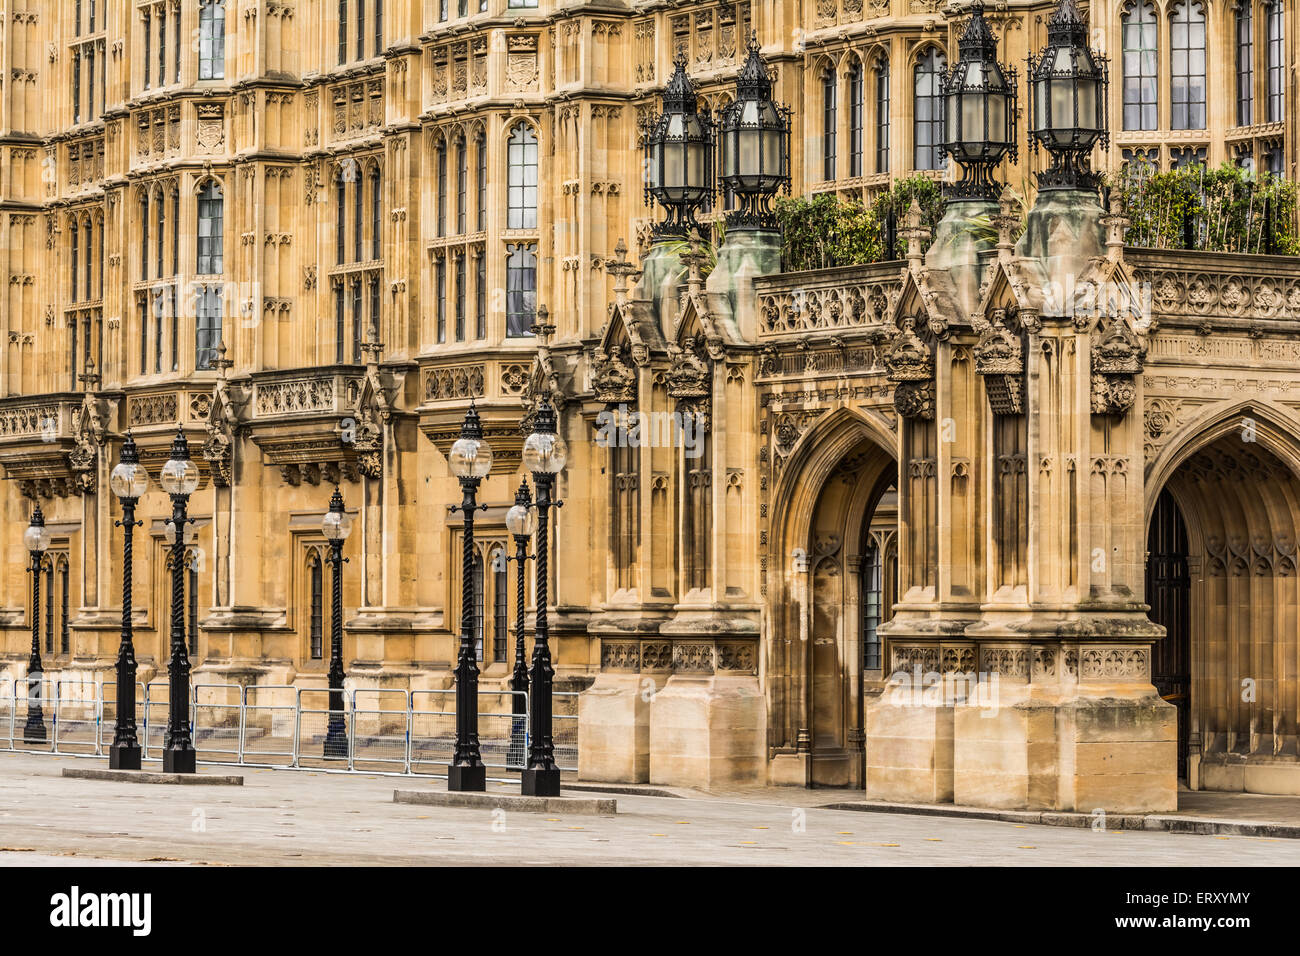 Architekturdetail des Palace of Westminster, London, UK. Stockfoto